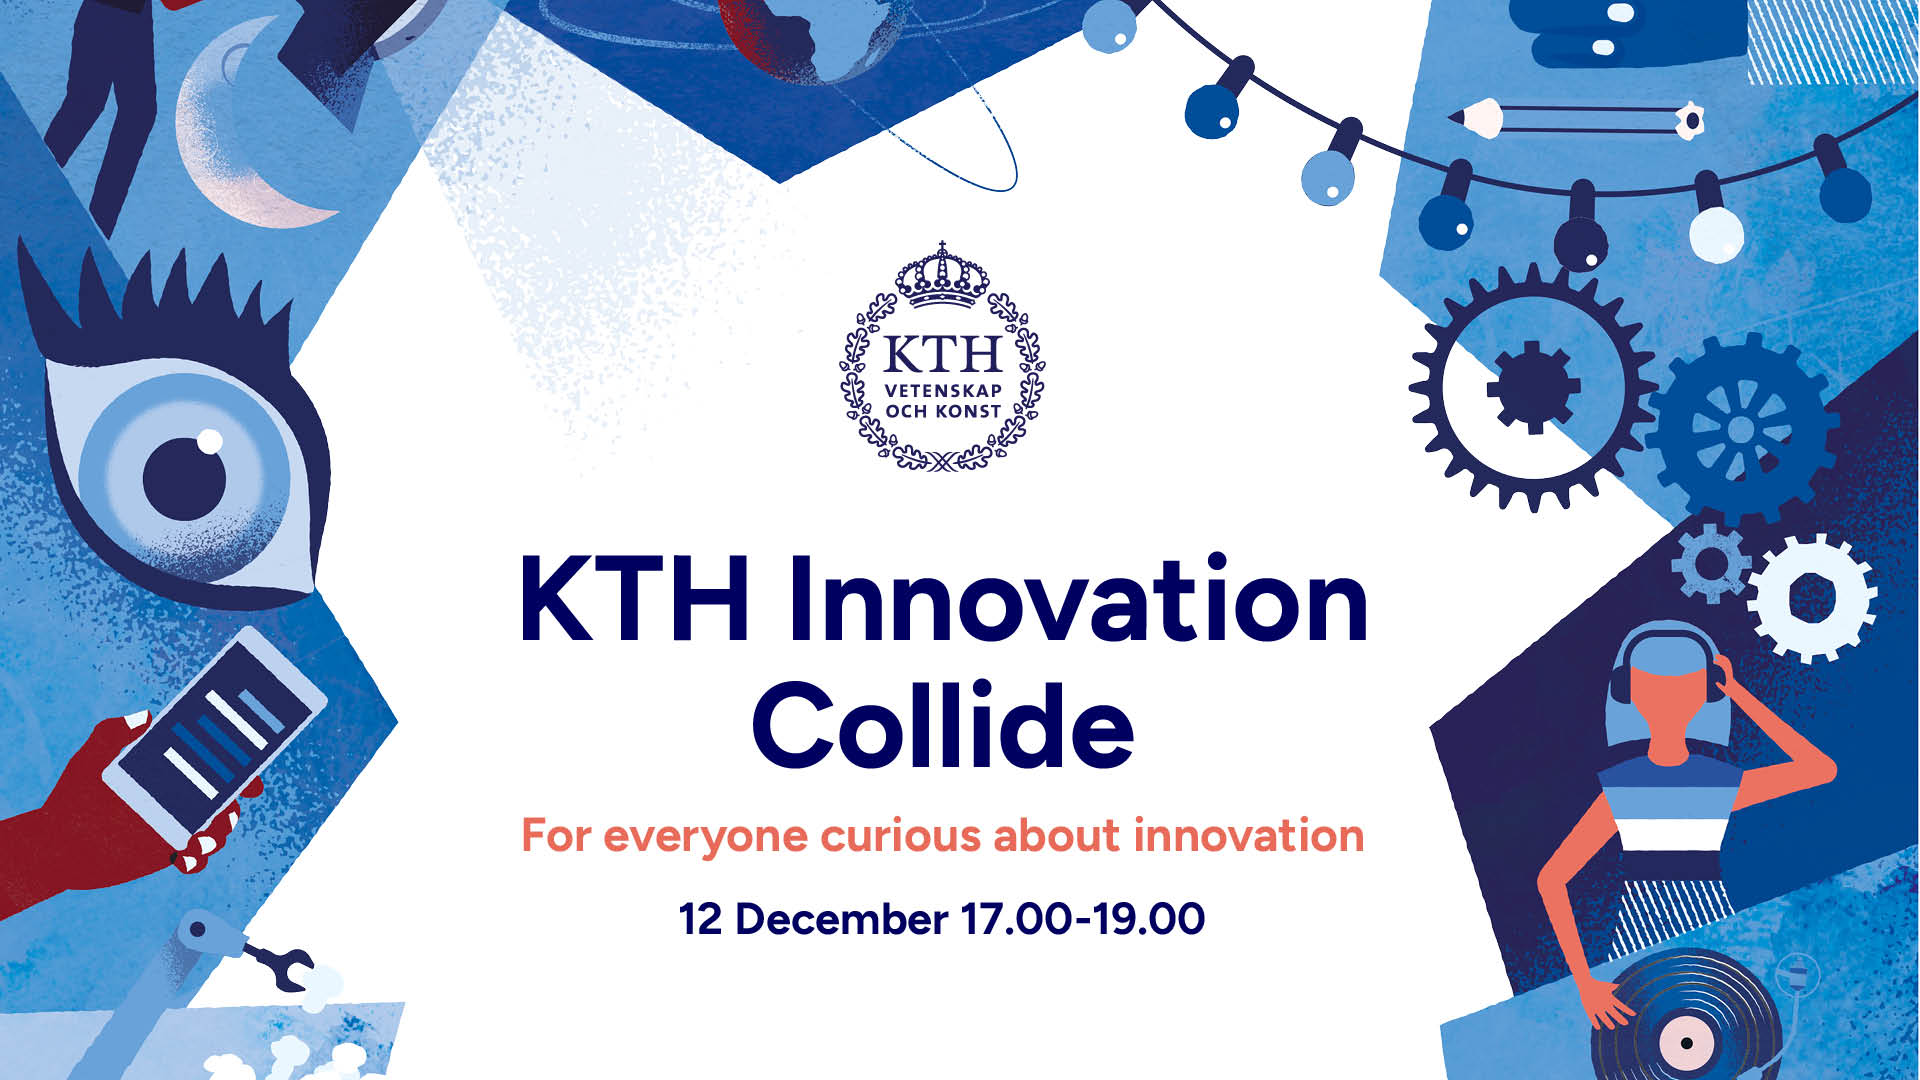 KTH Innovation Collide